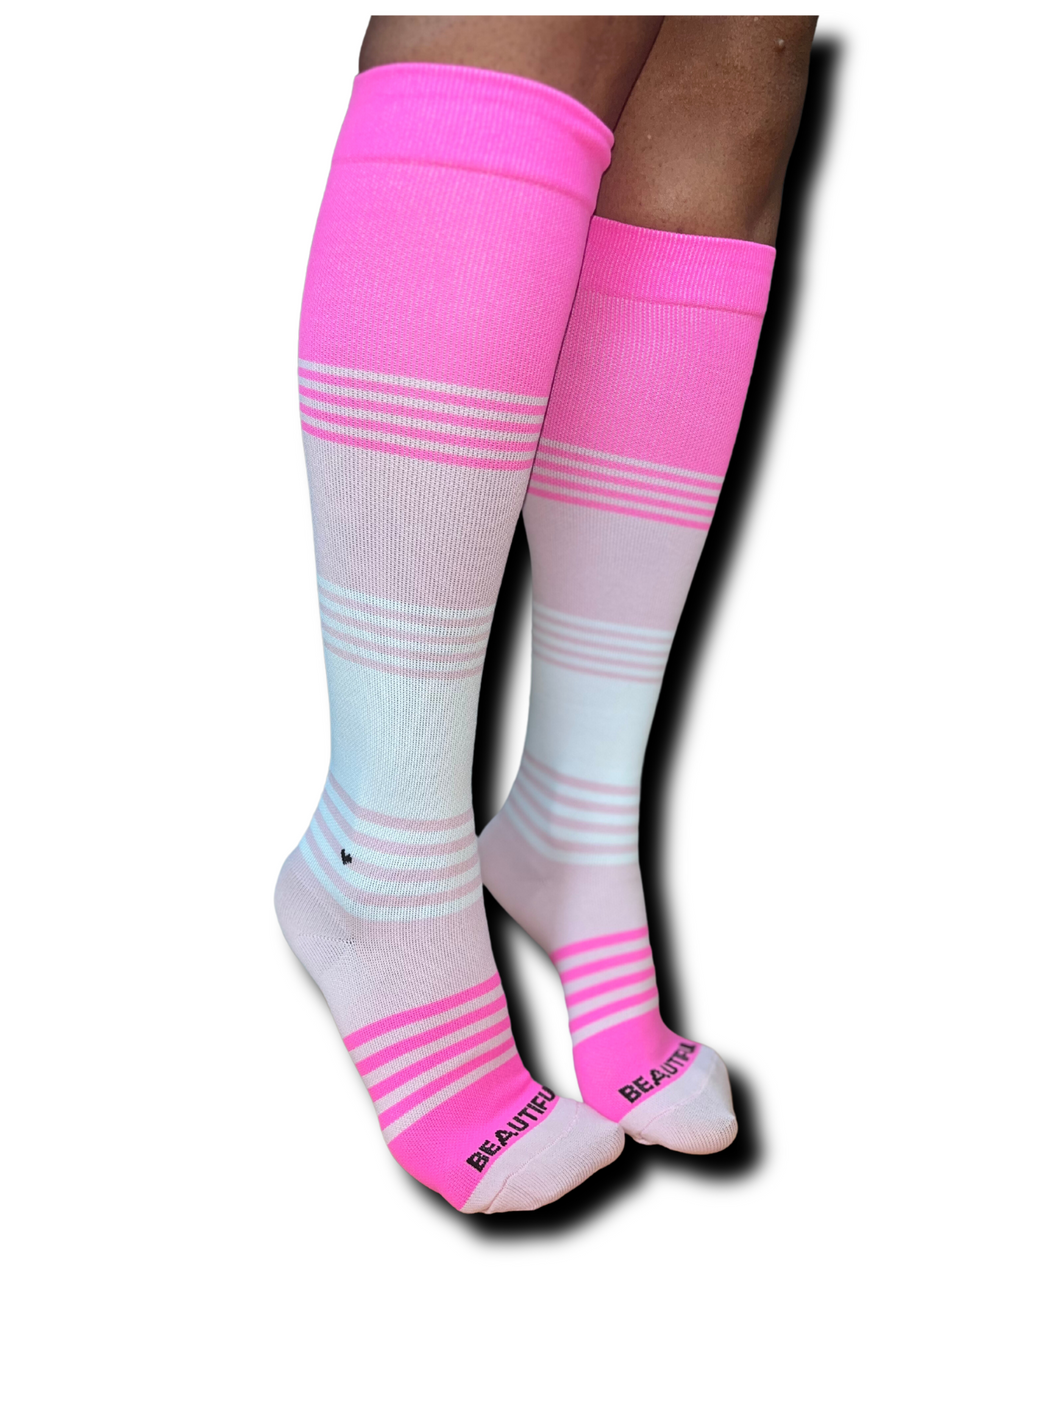 Pretty in Pink and White Striped Compression Socks